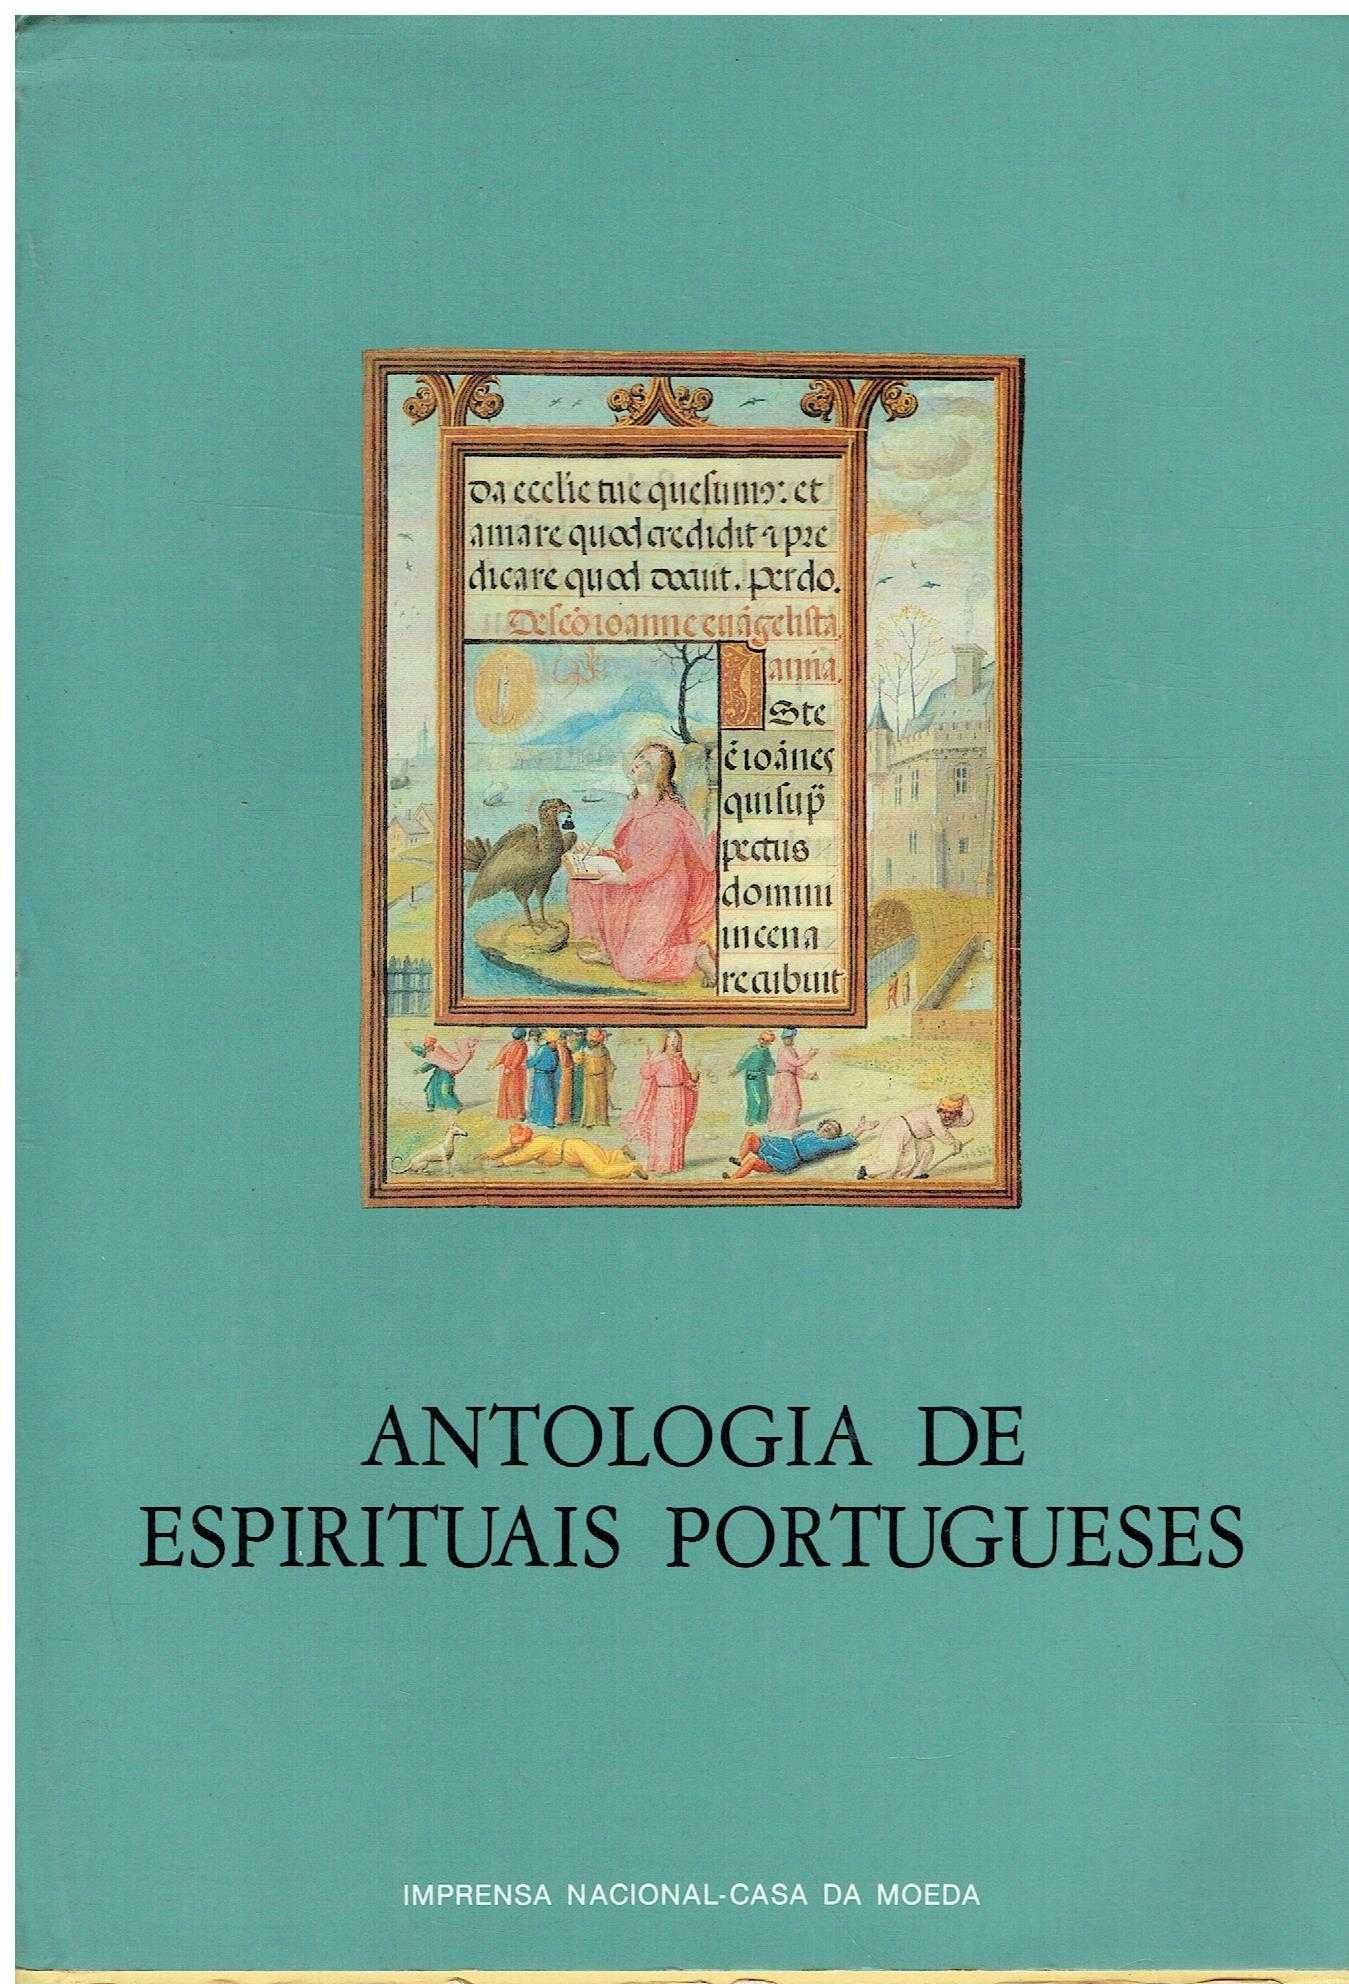 7821
Antologia de Espirituais Portugueses
de Maria de Lourdes Belchior